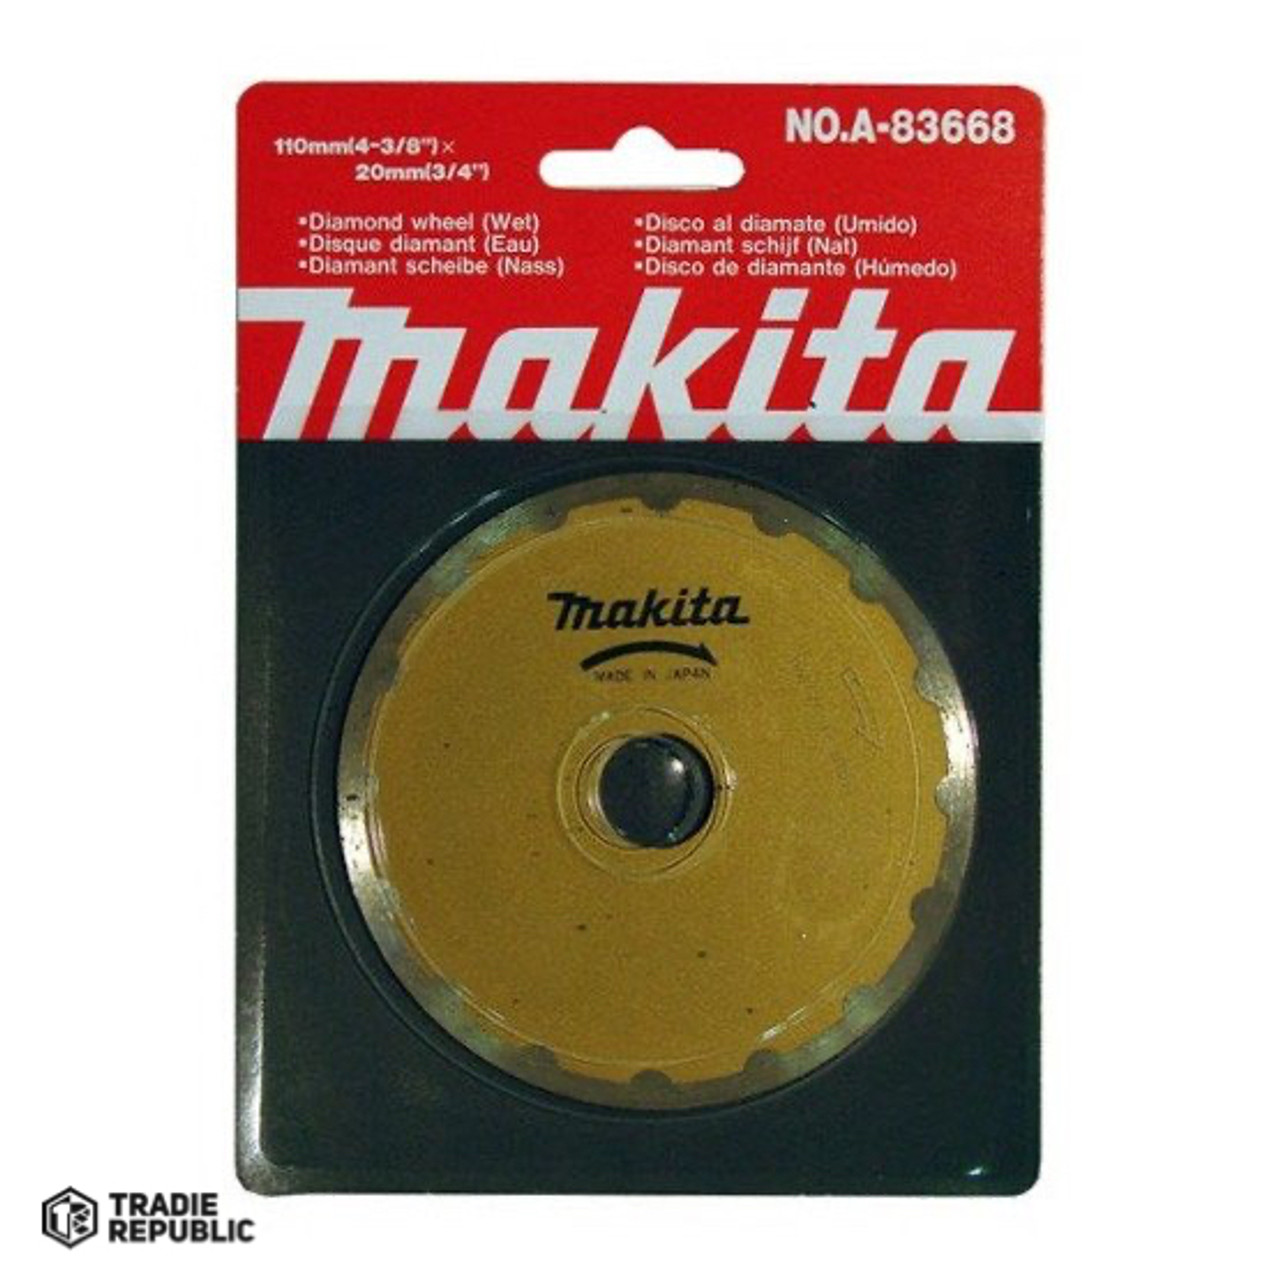 A-83668 Makita A-83668 110mm Continuous Rim Tile & Marble Diamond Blade - 20mm Bore